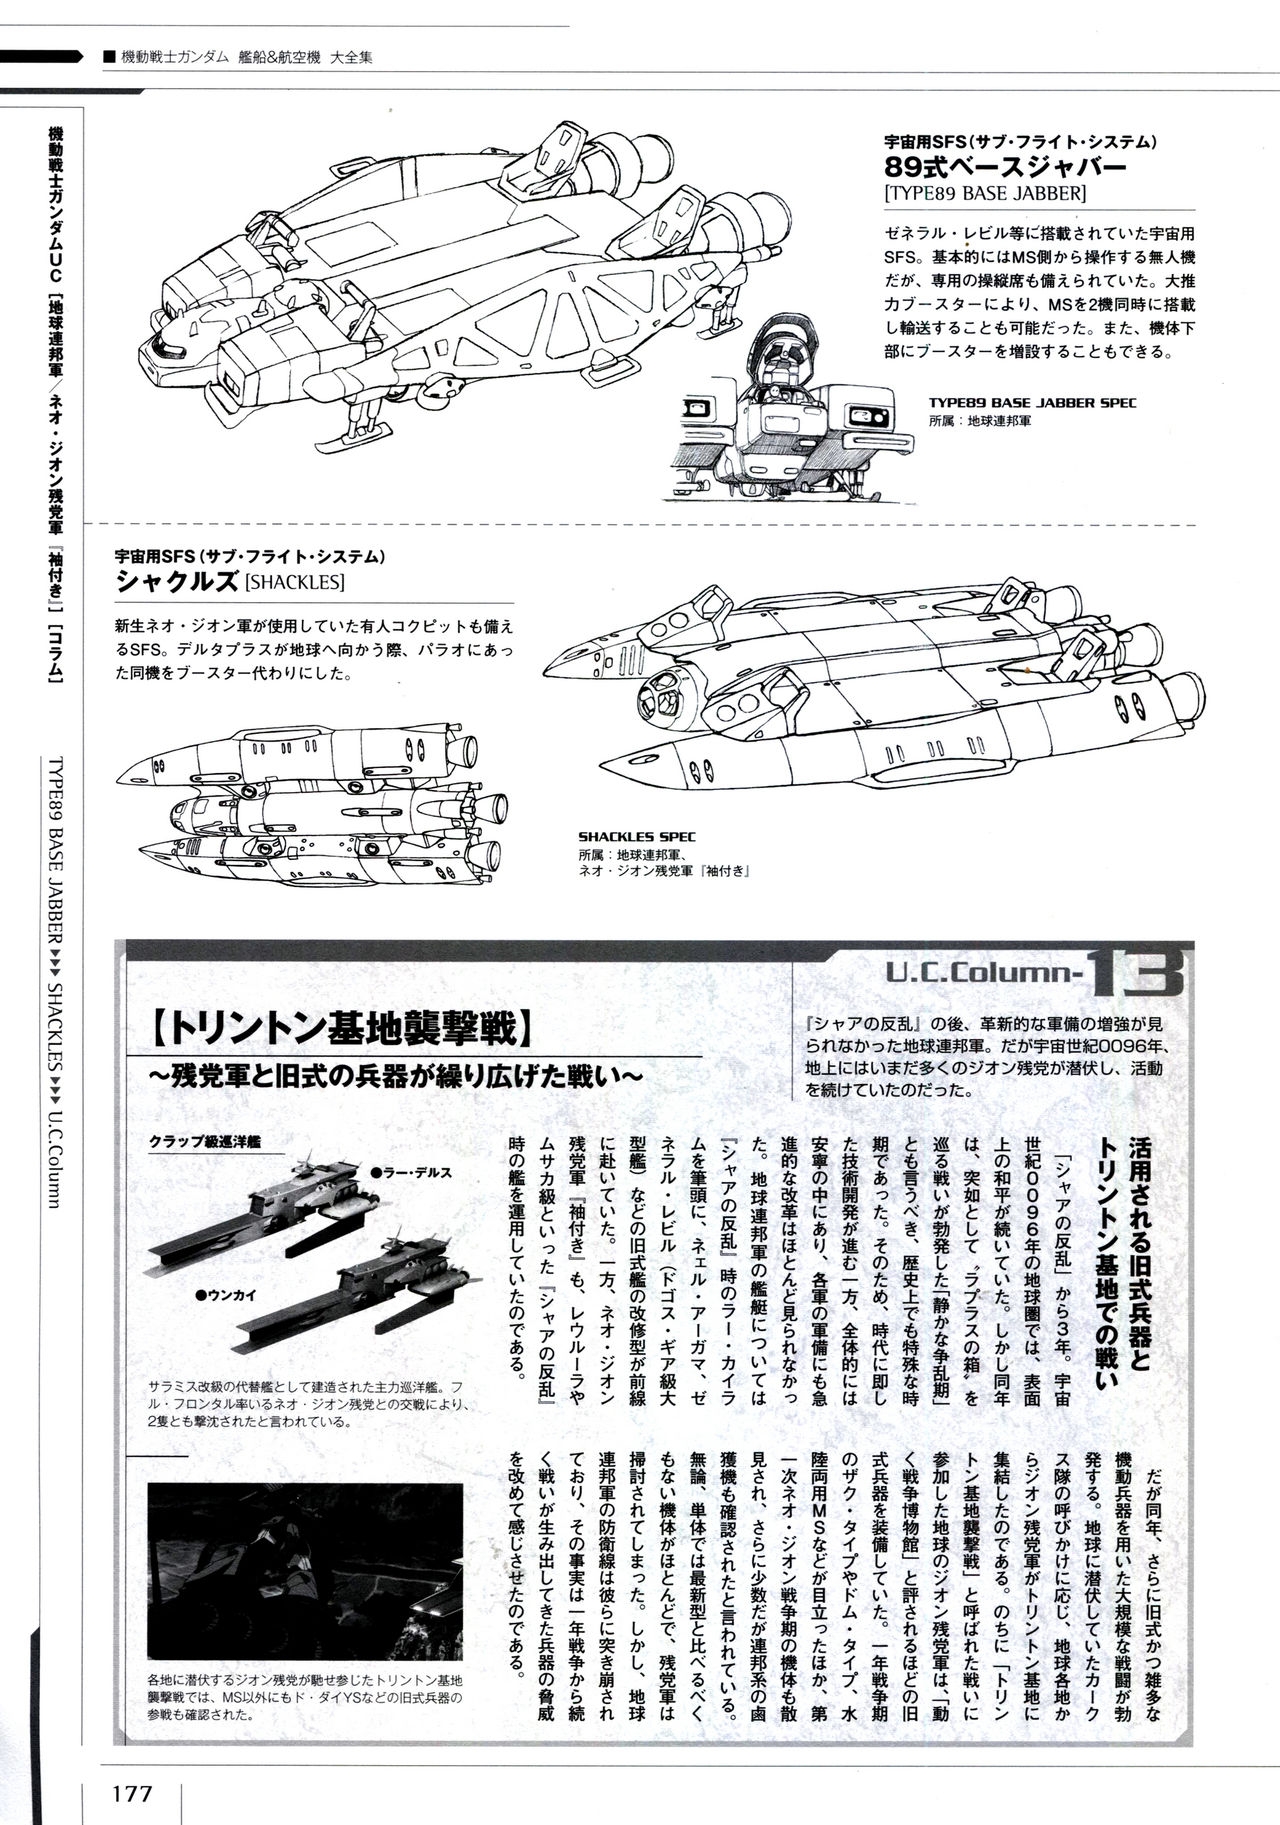 Mobile Suit Gundam - Ship & Aerospace Plane Encyclopedia - Revised Edition 182